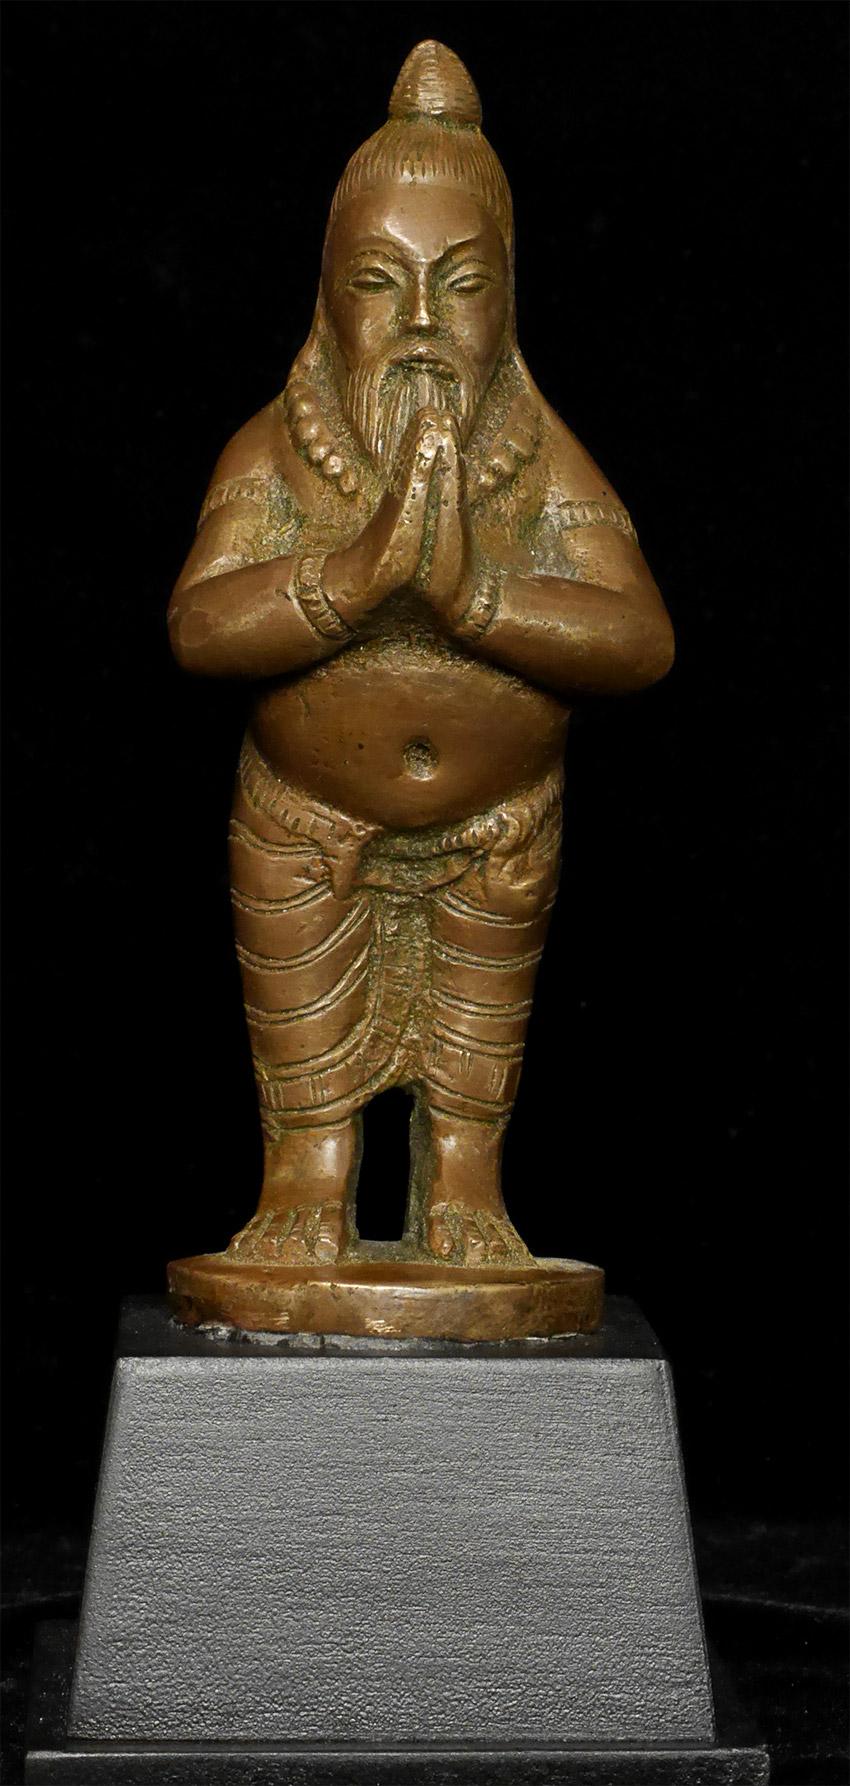 Indien Yogi indien ancien, sculpture hindoue unique en bronze massif coulé - 7816 en vente